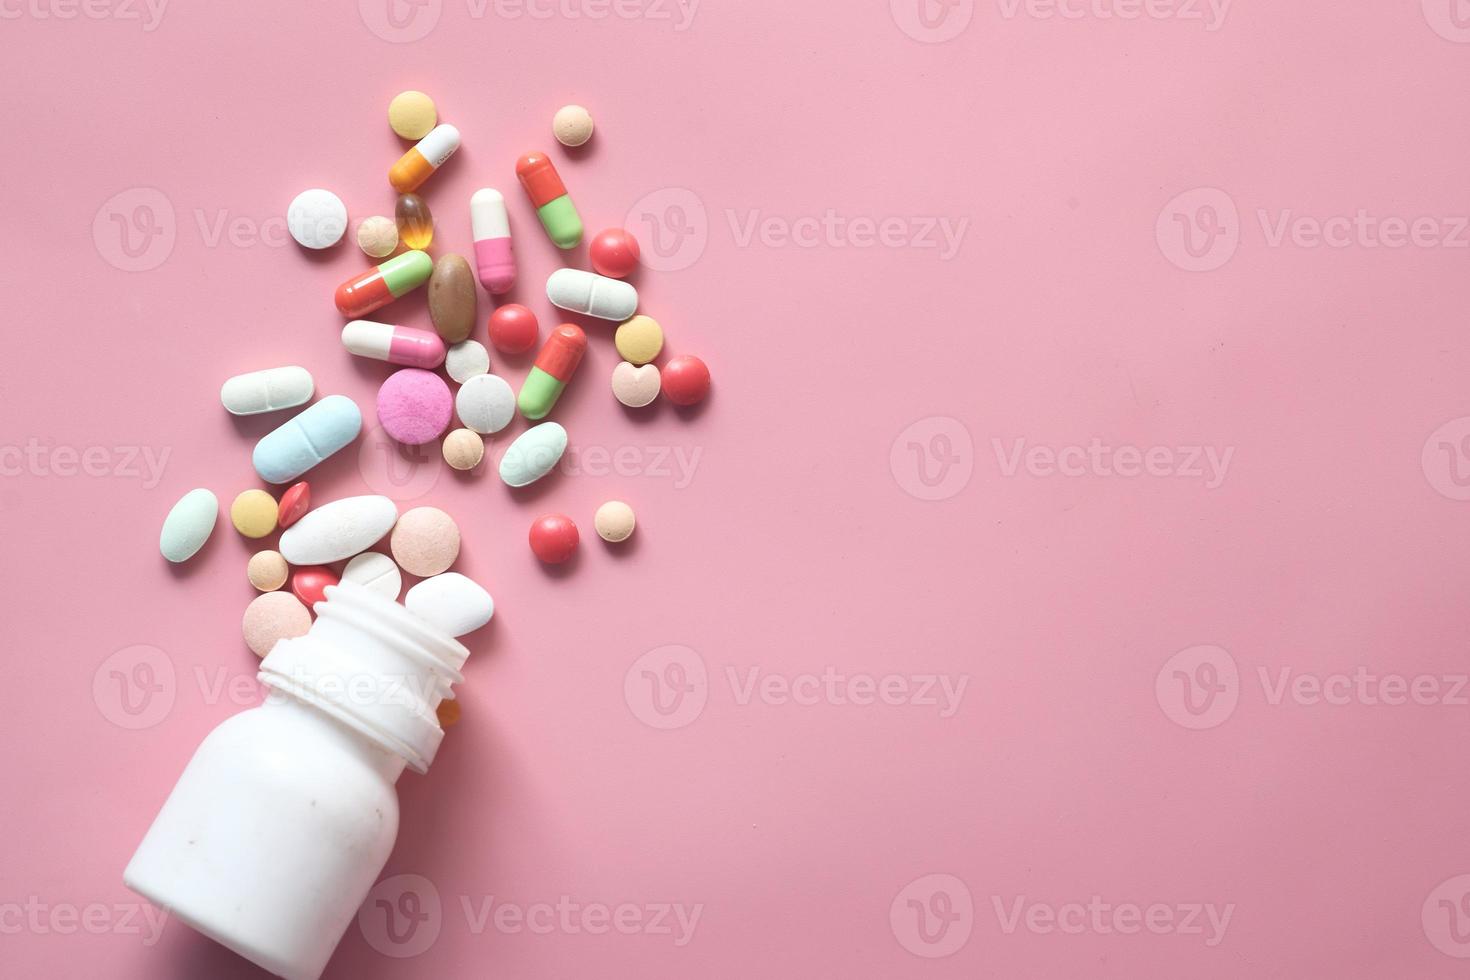 pílulas e cápsulas coloridas derramando no fundo rosa foto